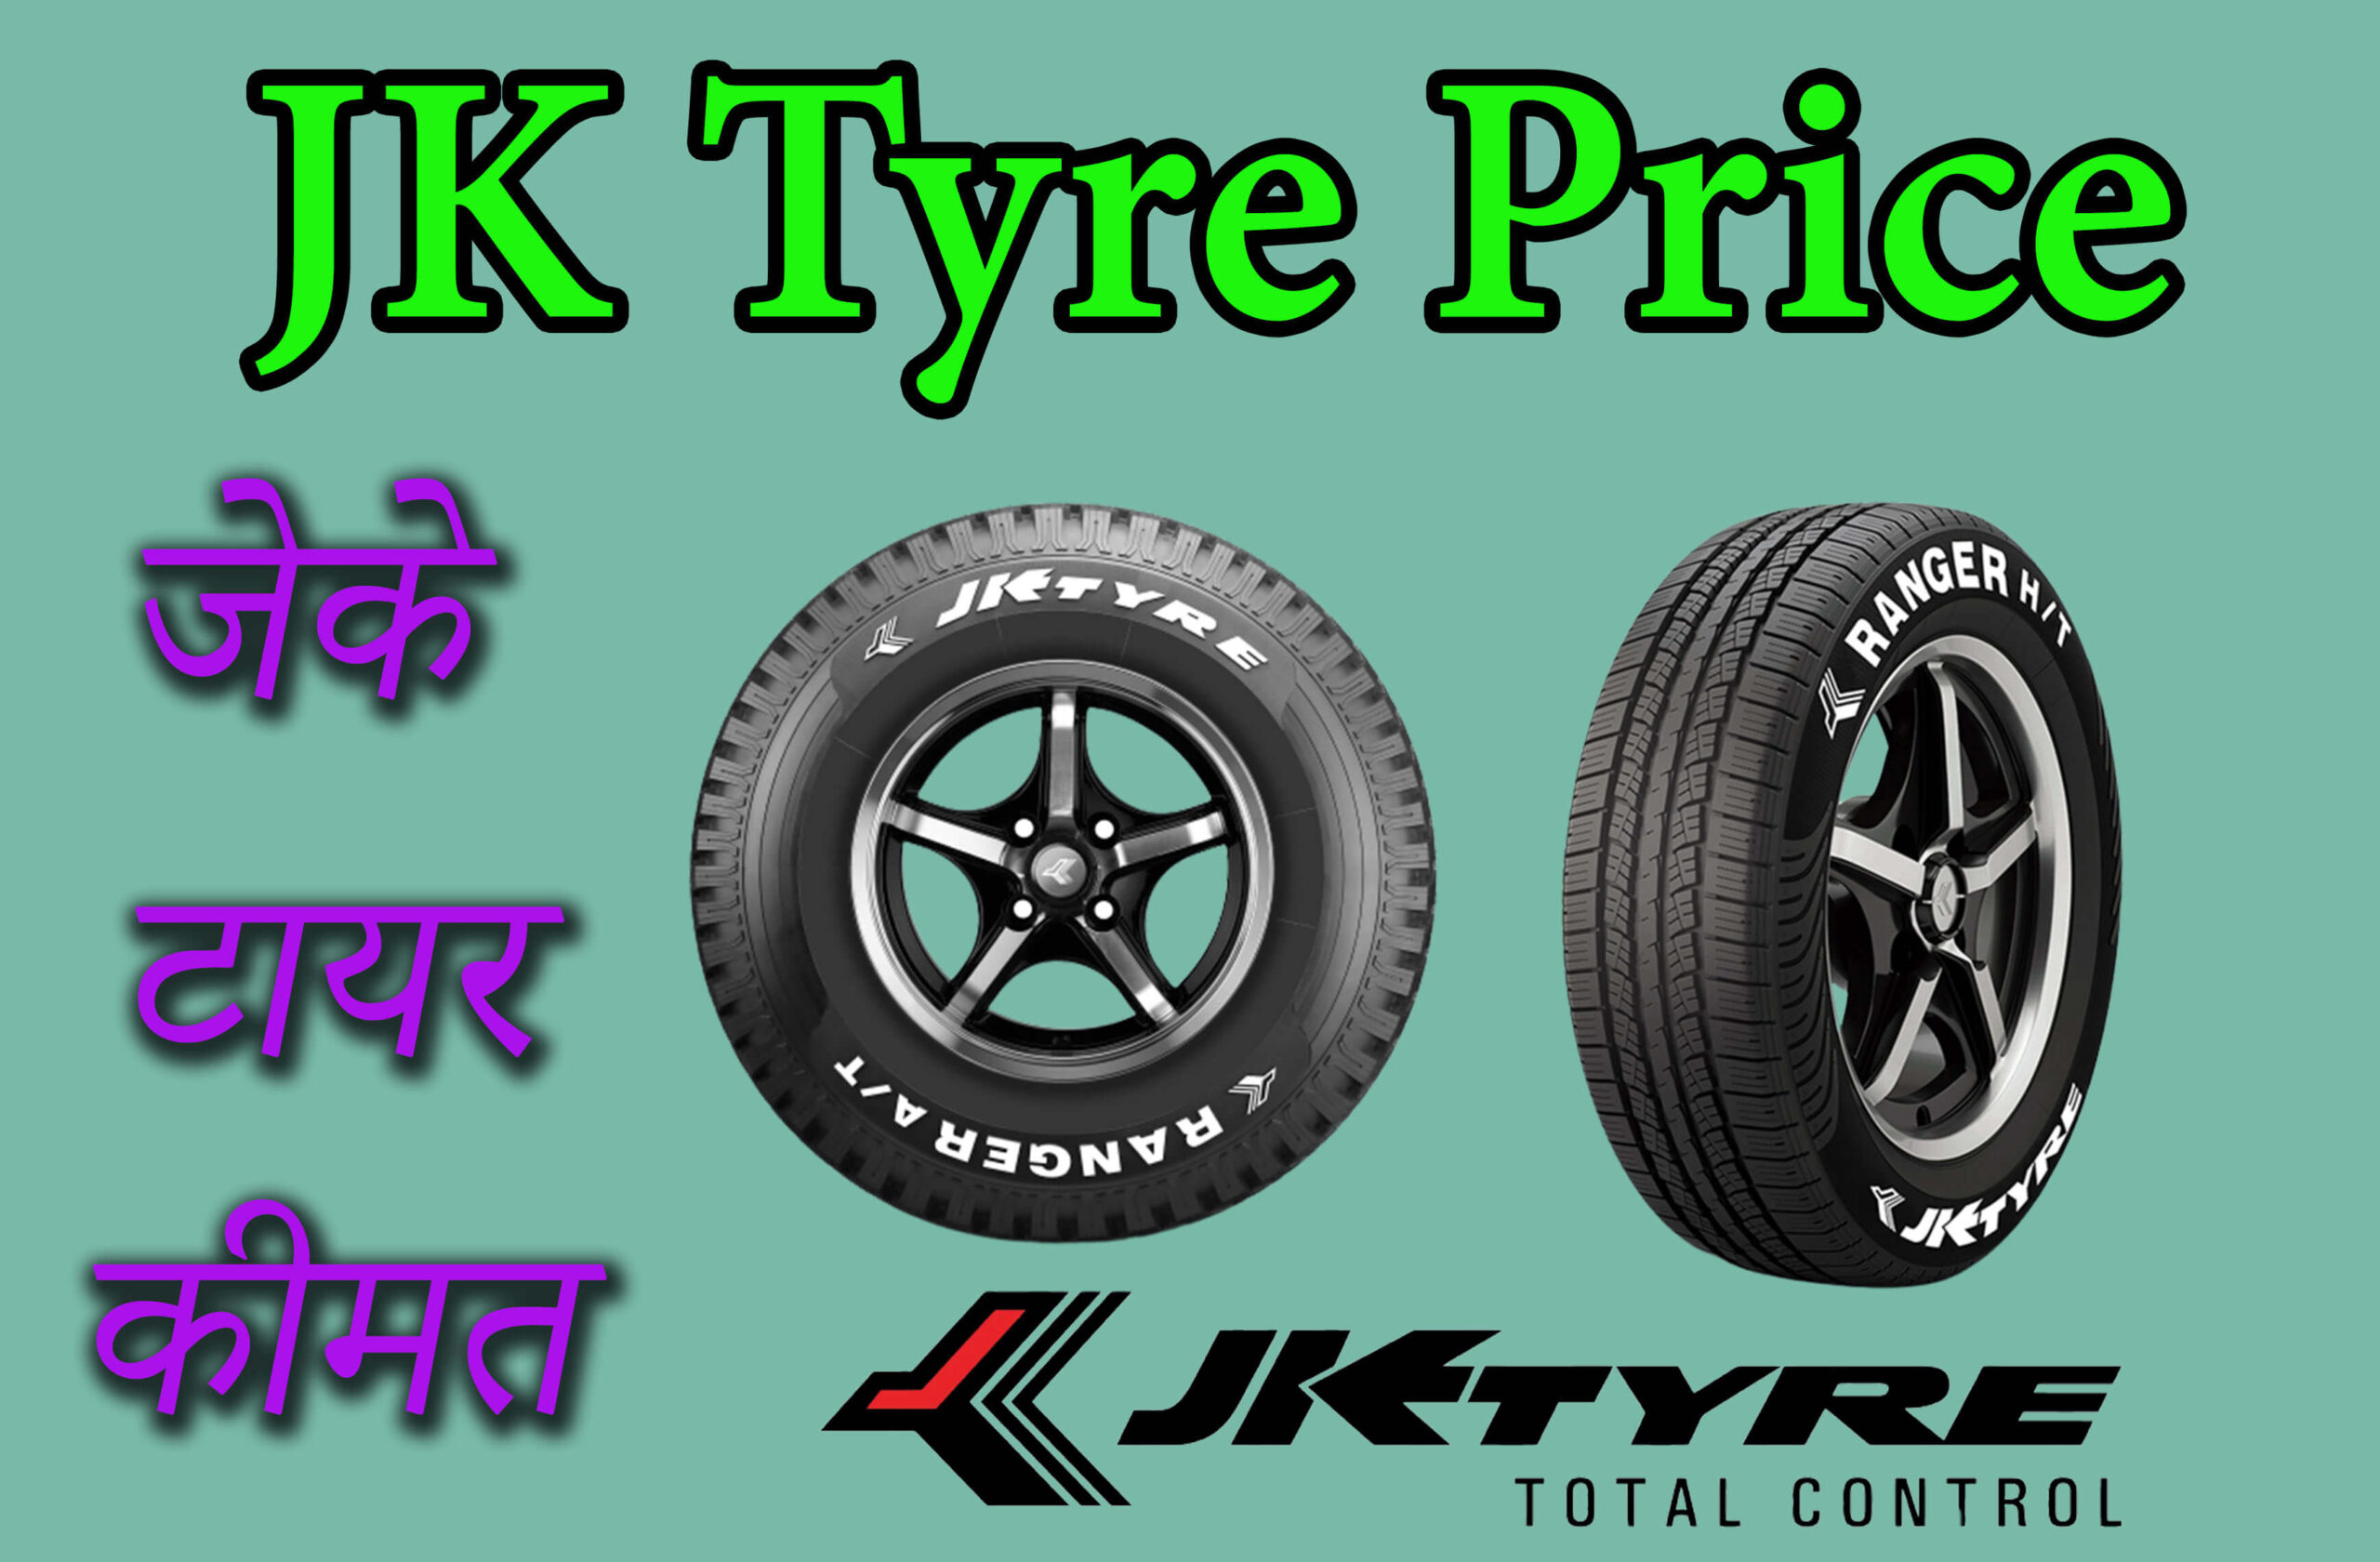 JK Tyre Price